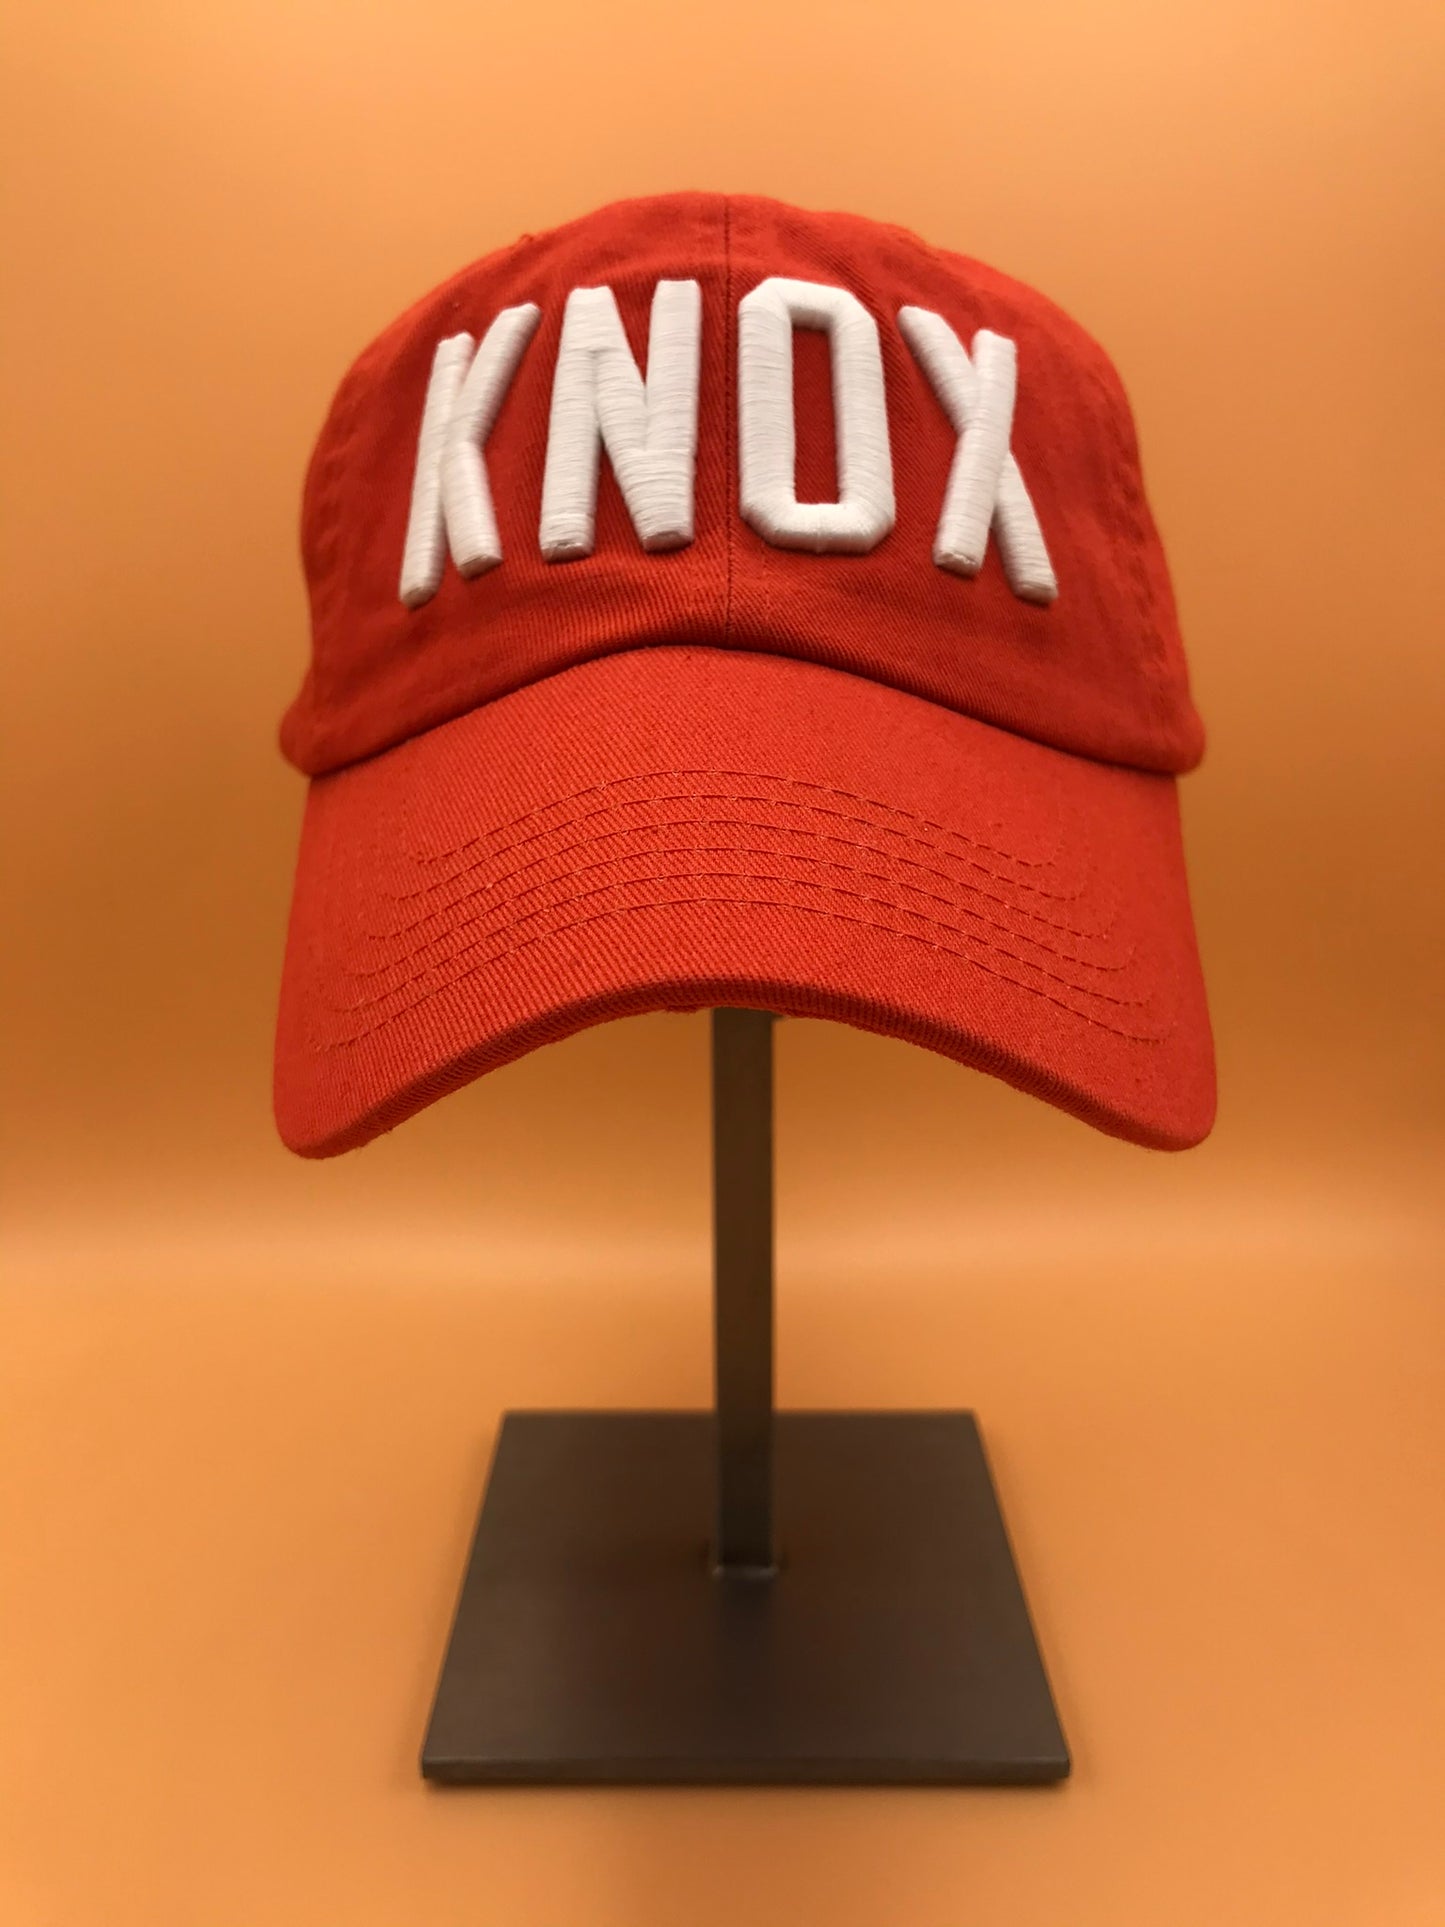 KNOX Hat